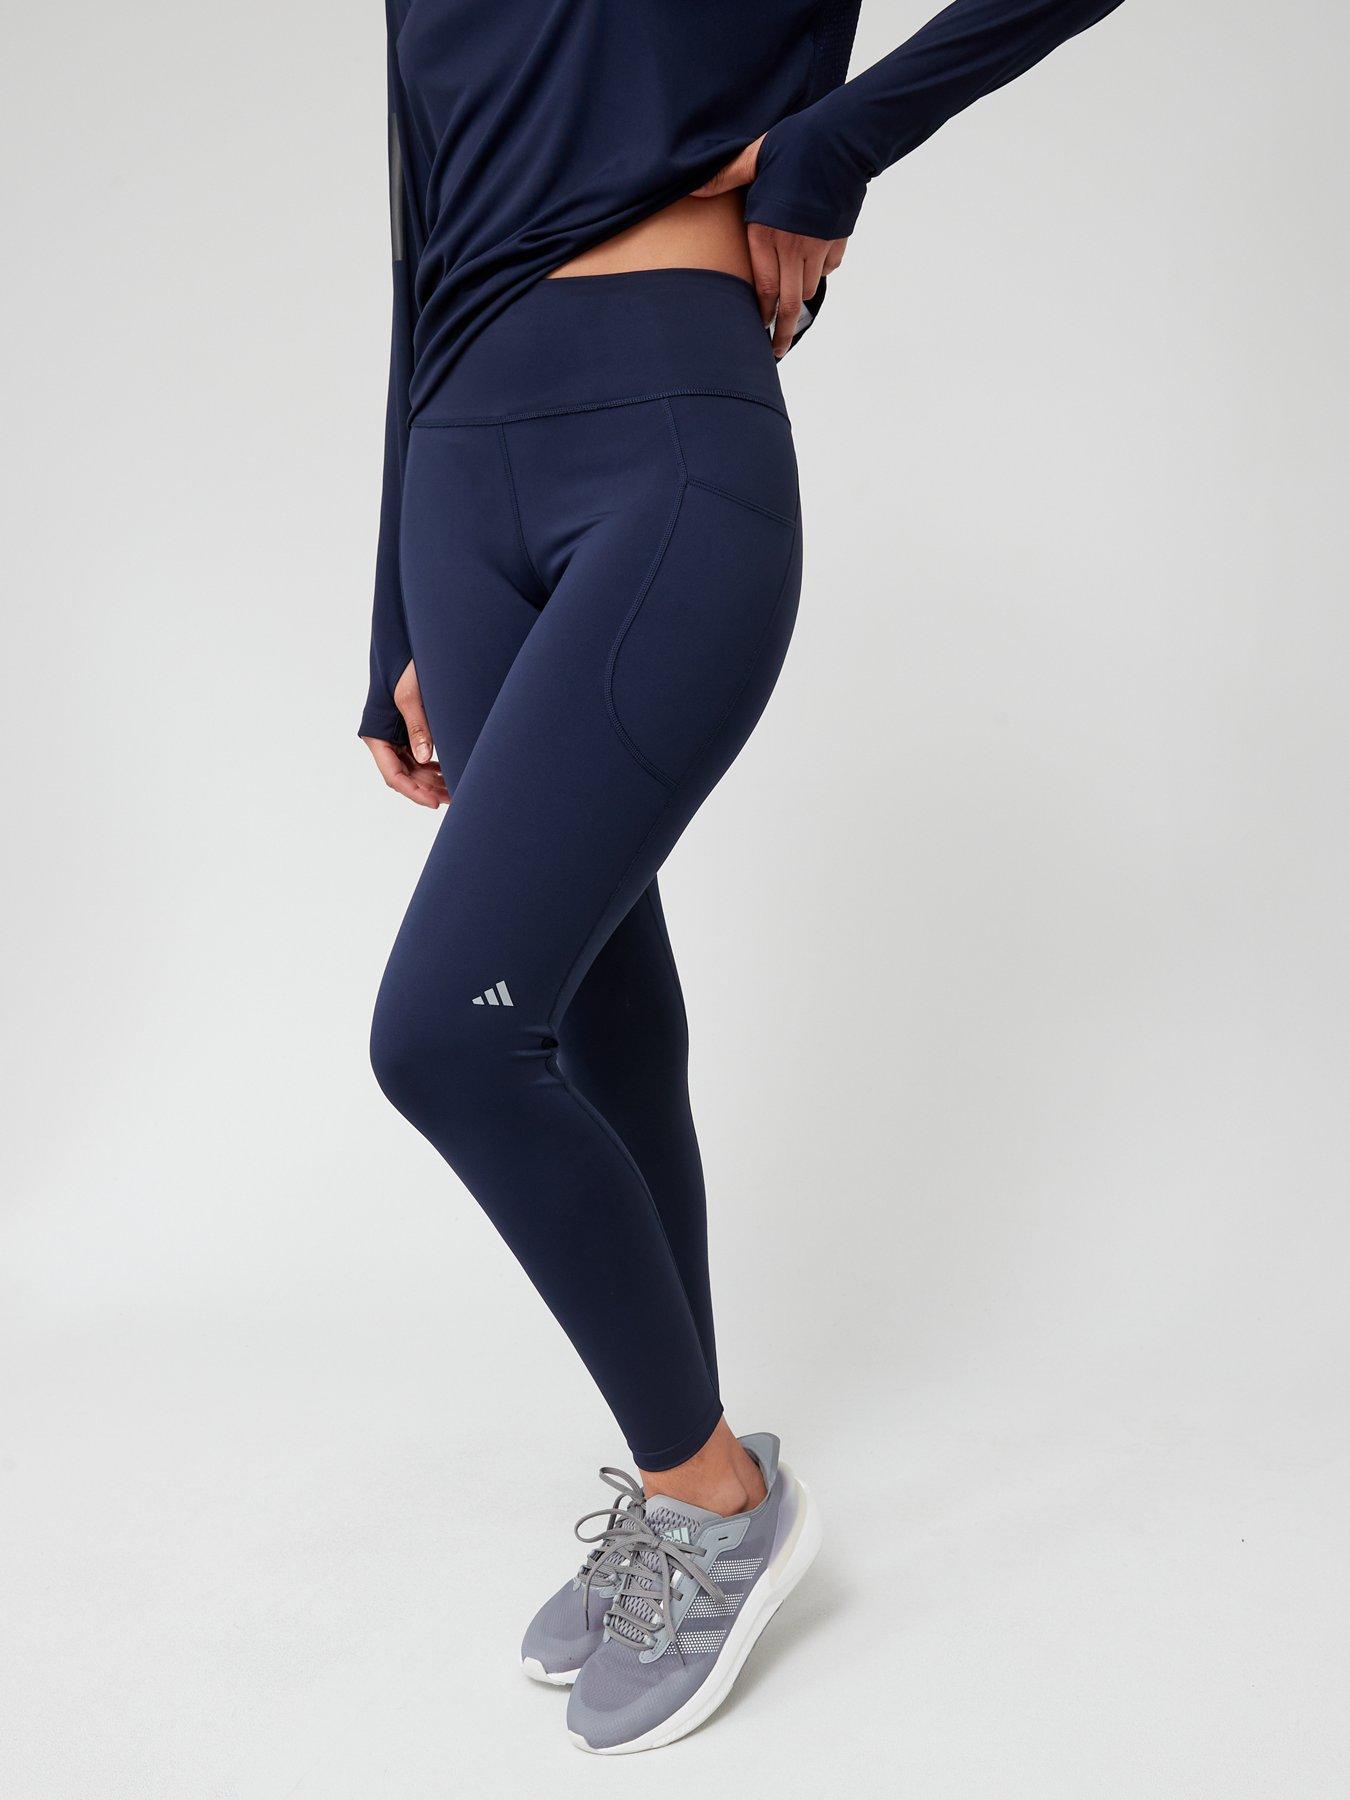 Capri, Tights & leggings, Womens sports clothing